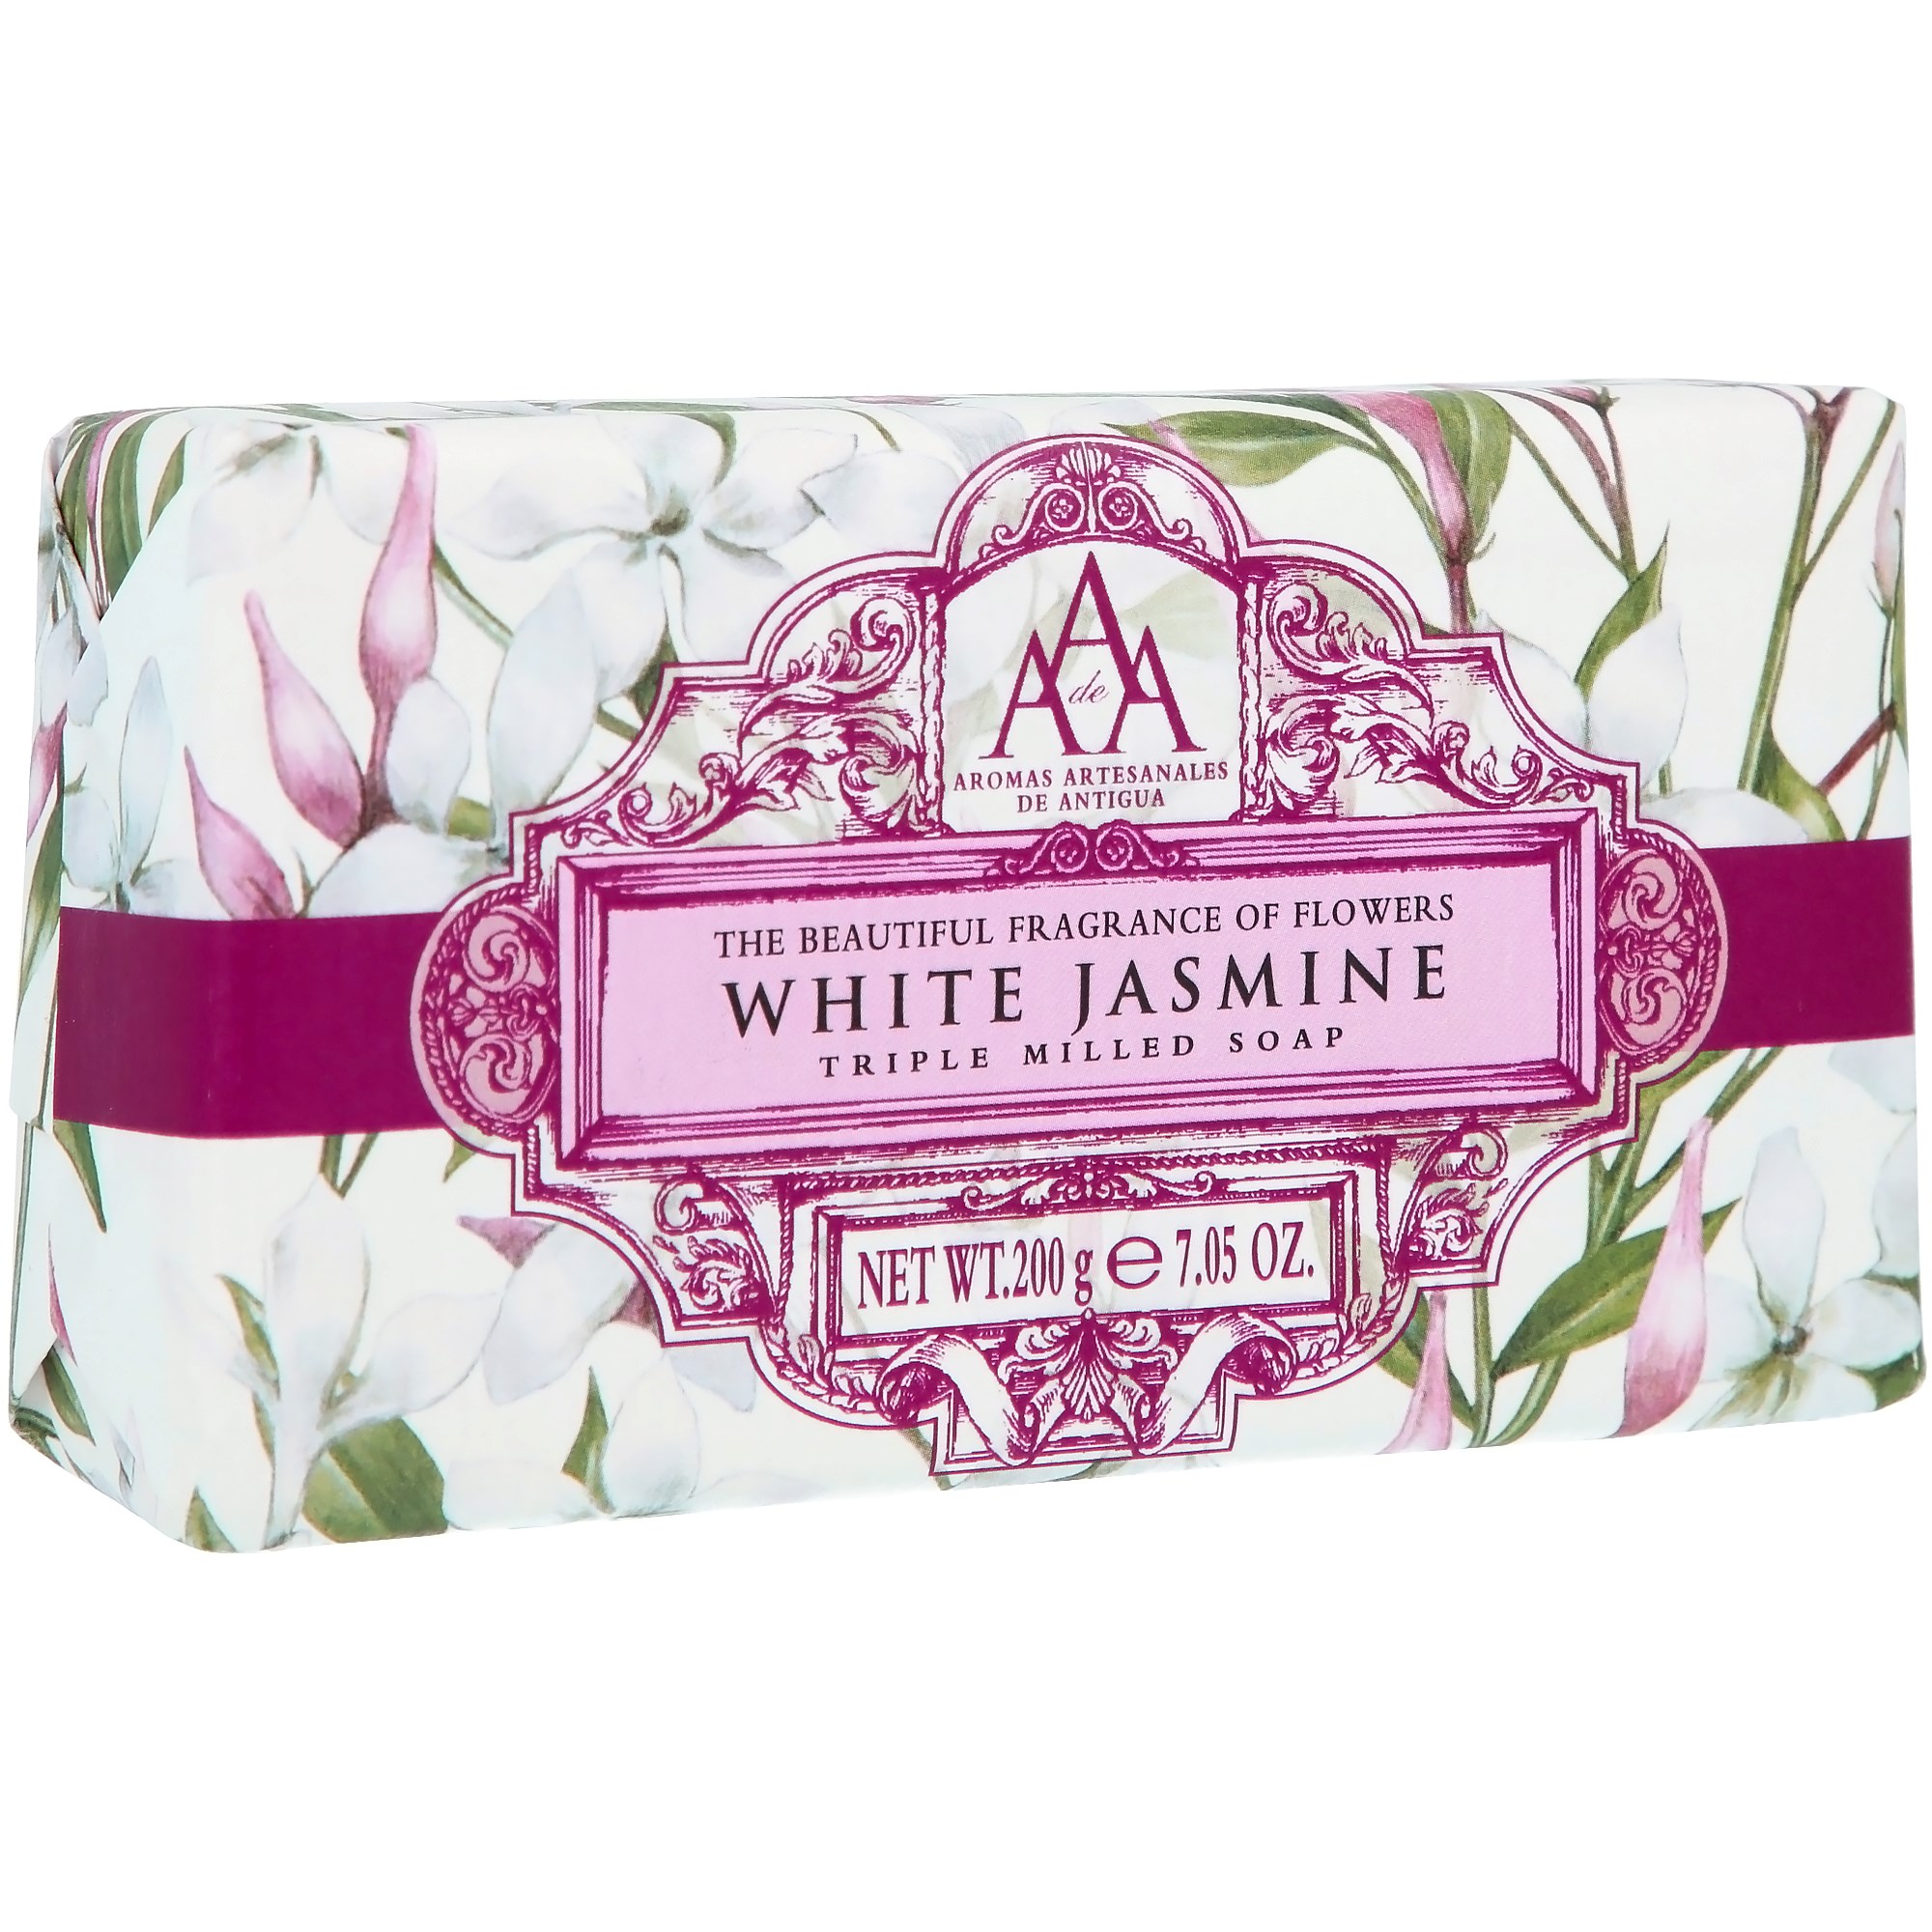 Zdjęcia - Mydło AAA - Aromas Artesanales de Antigua Soap White Jasmine 200 g